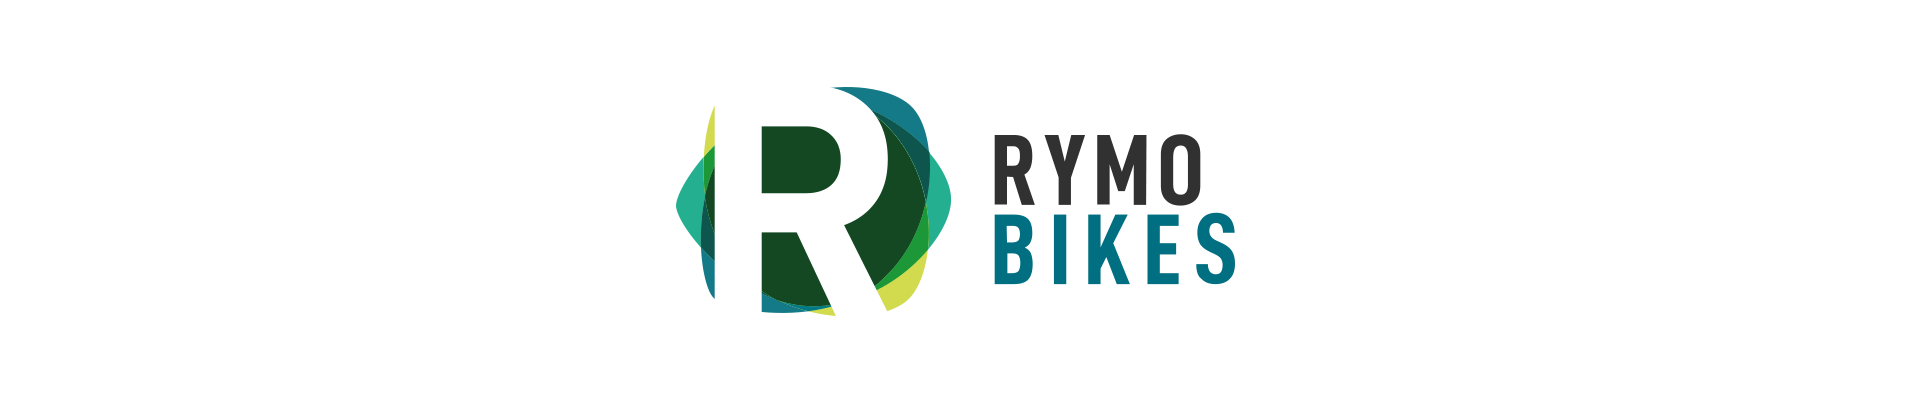 RYMO Bikes